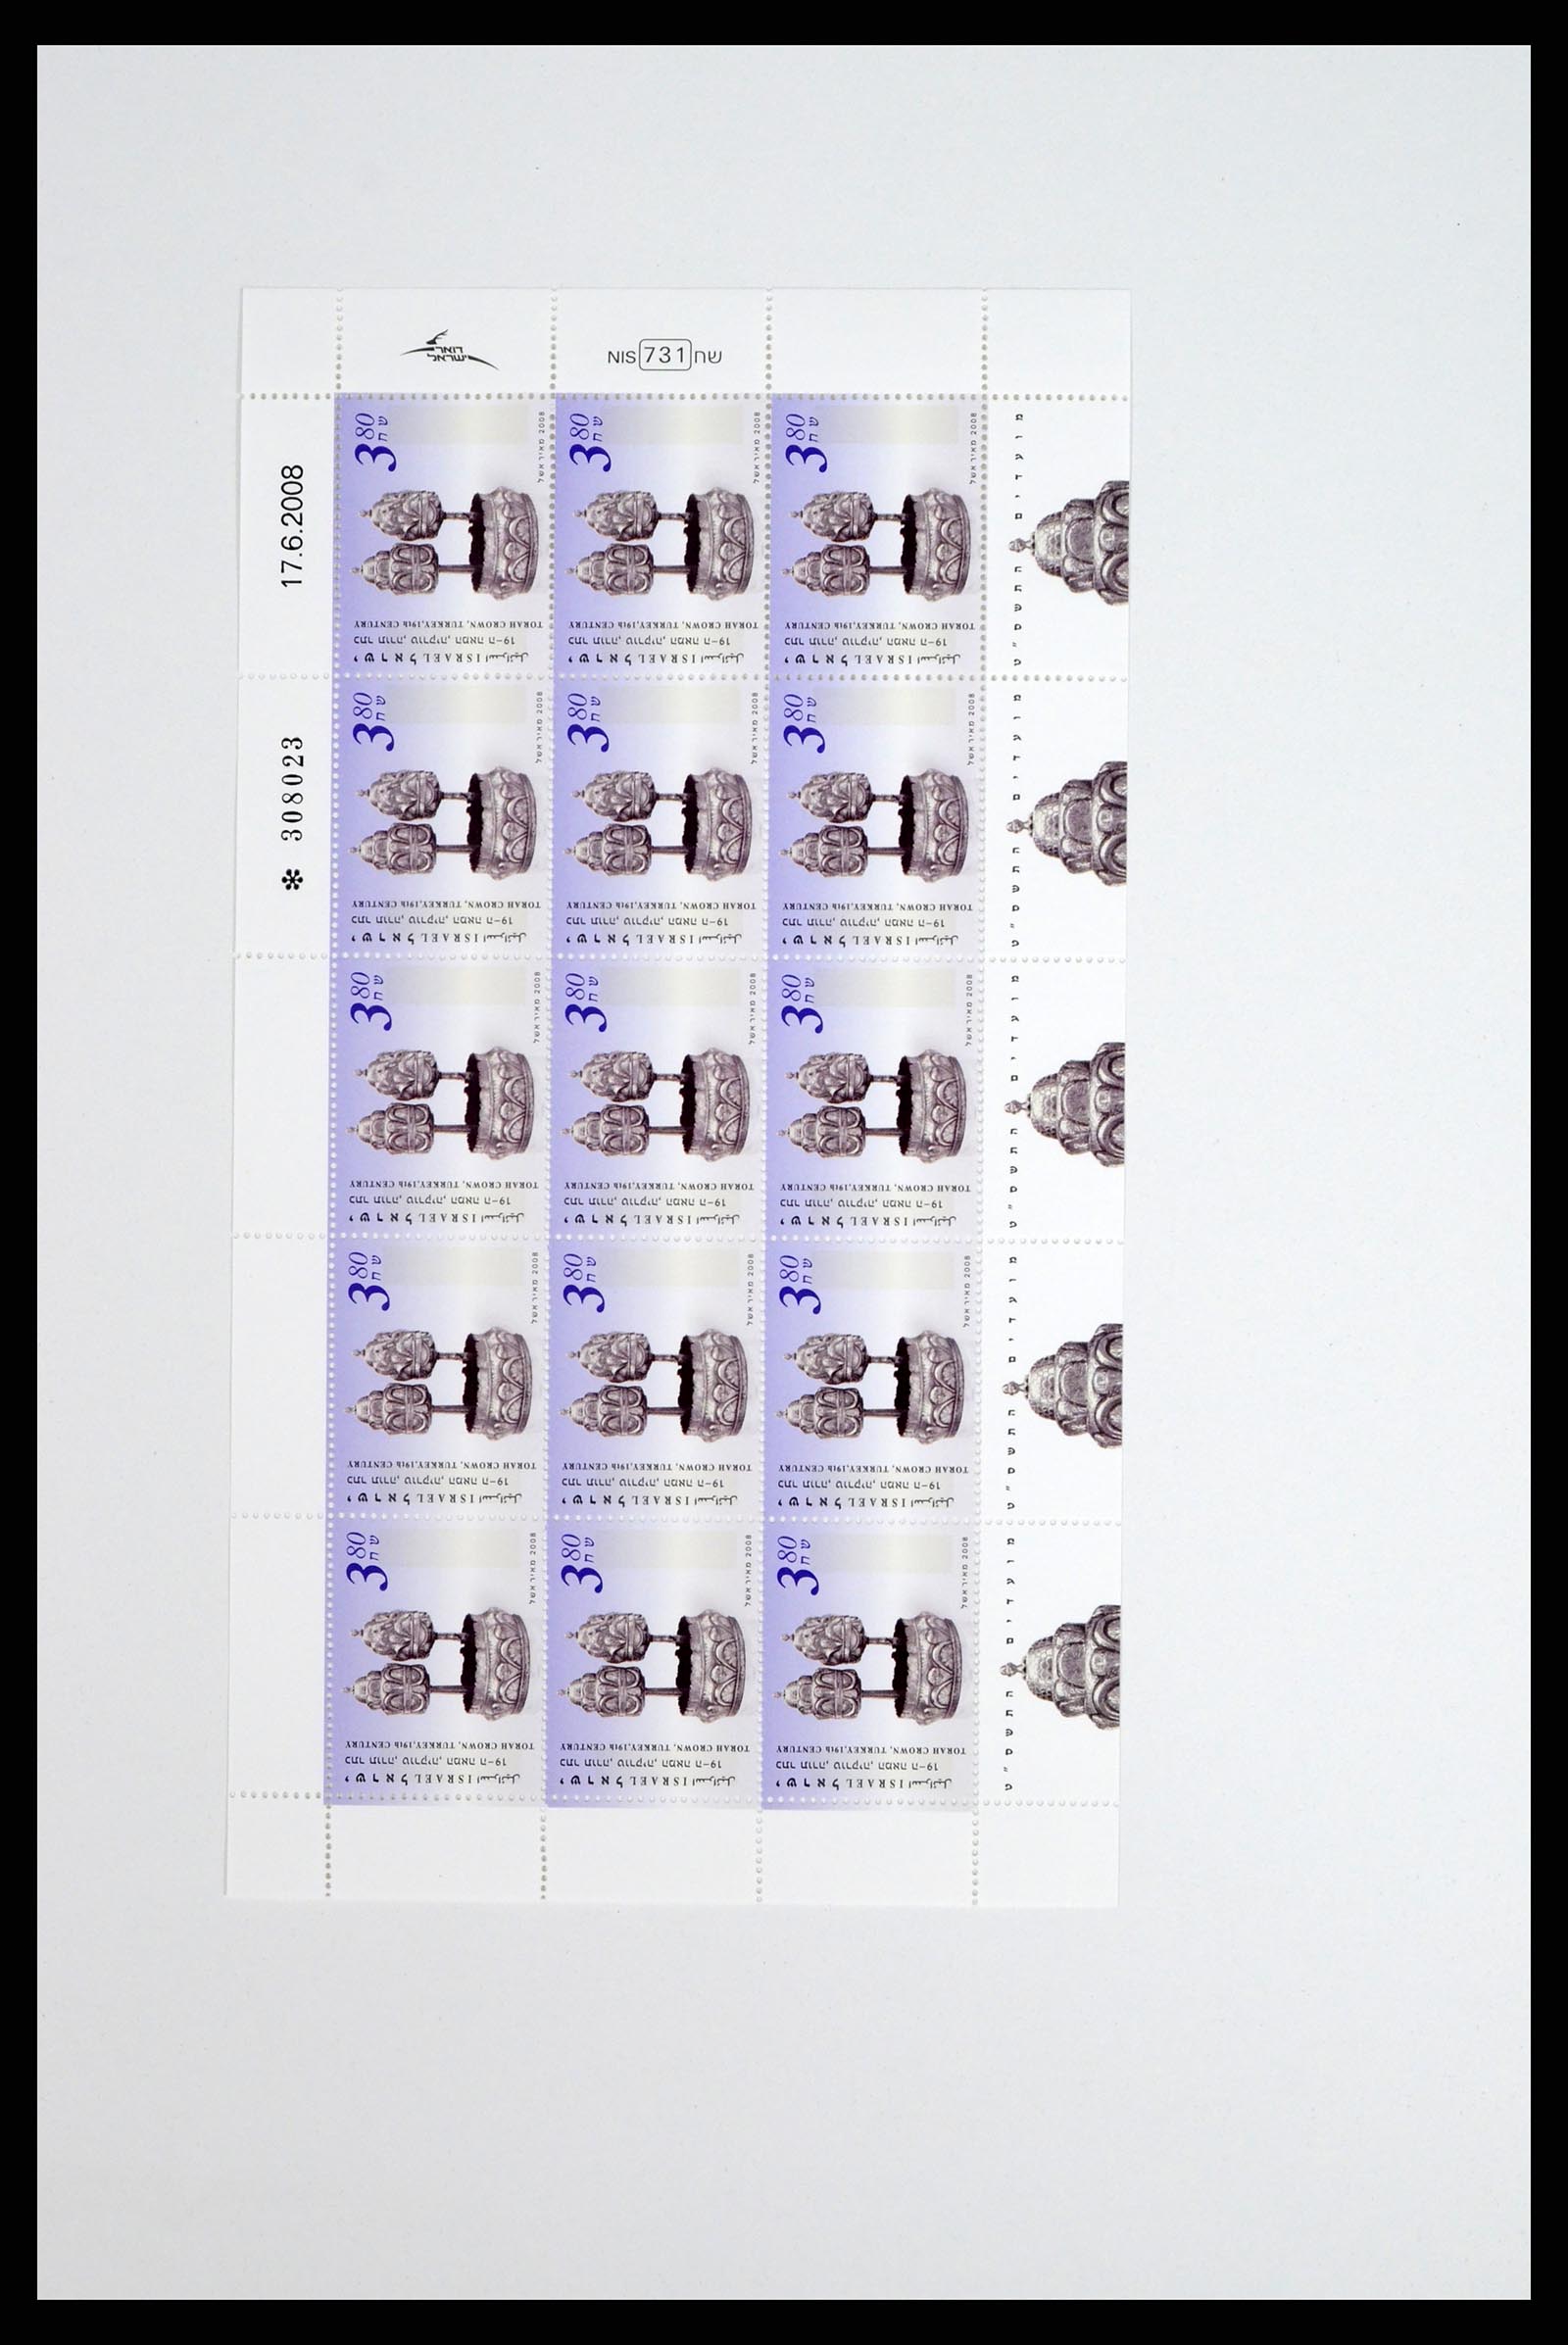 37779 056 - Stamp collection 37779 Israel sheetlets 1986-2009.